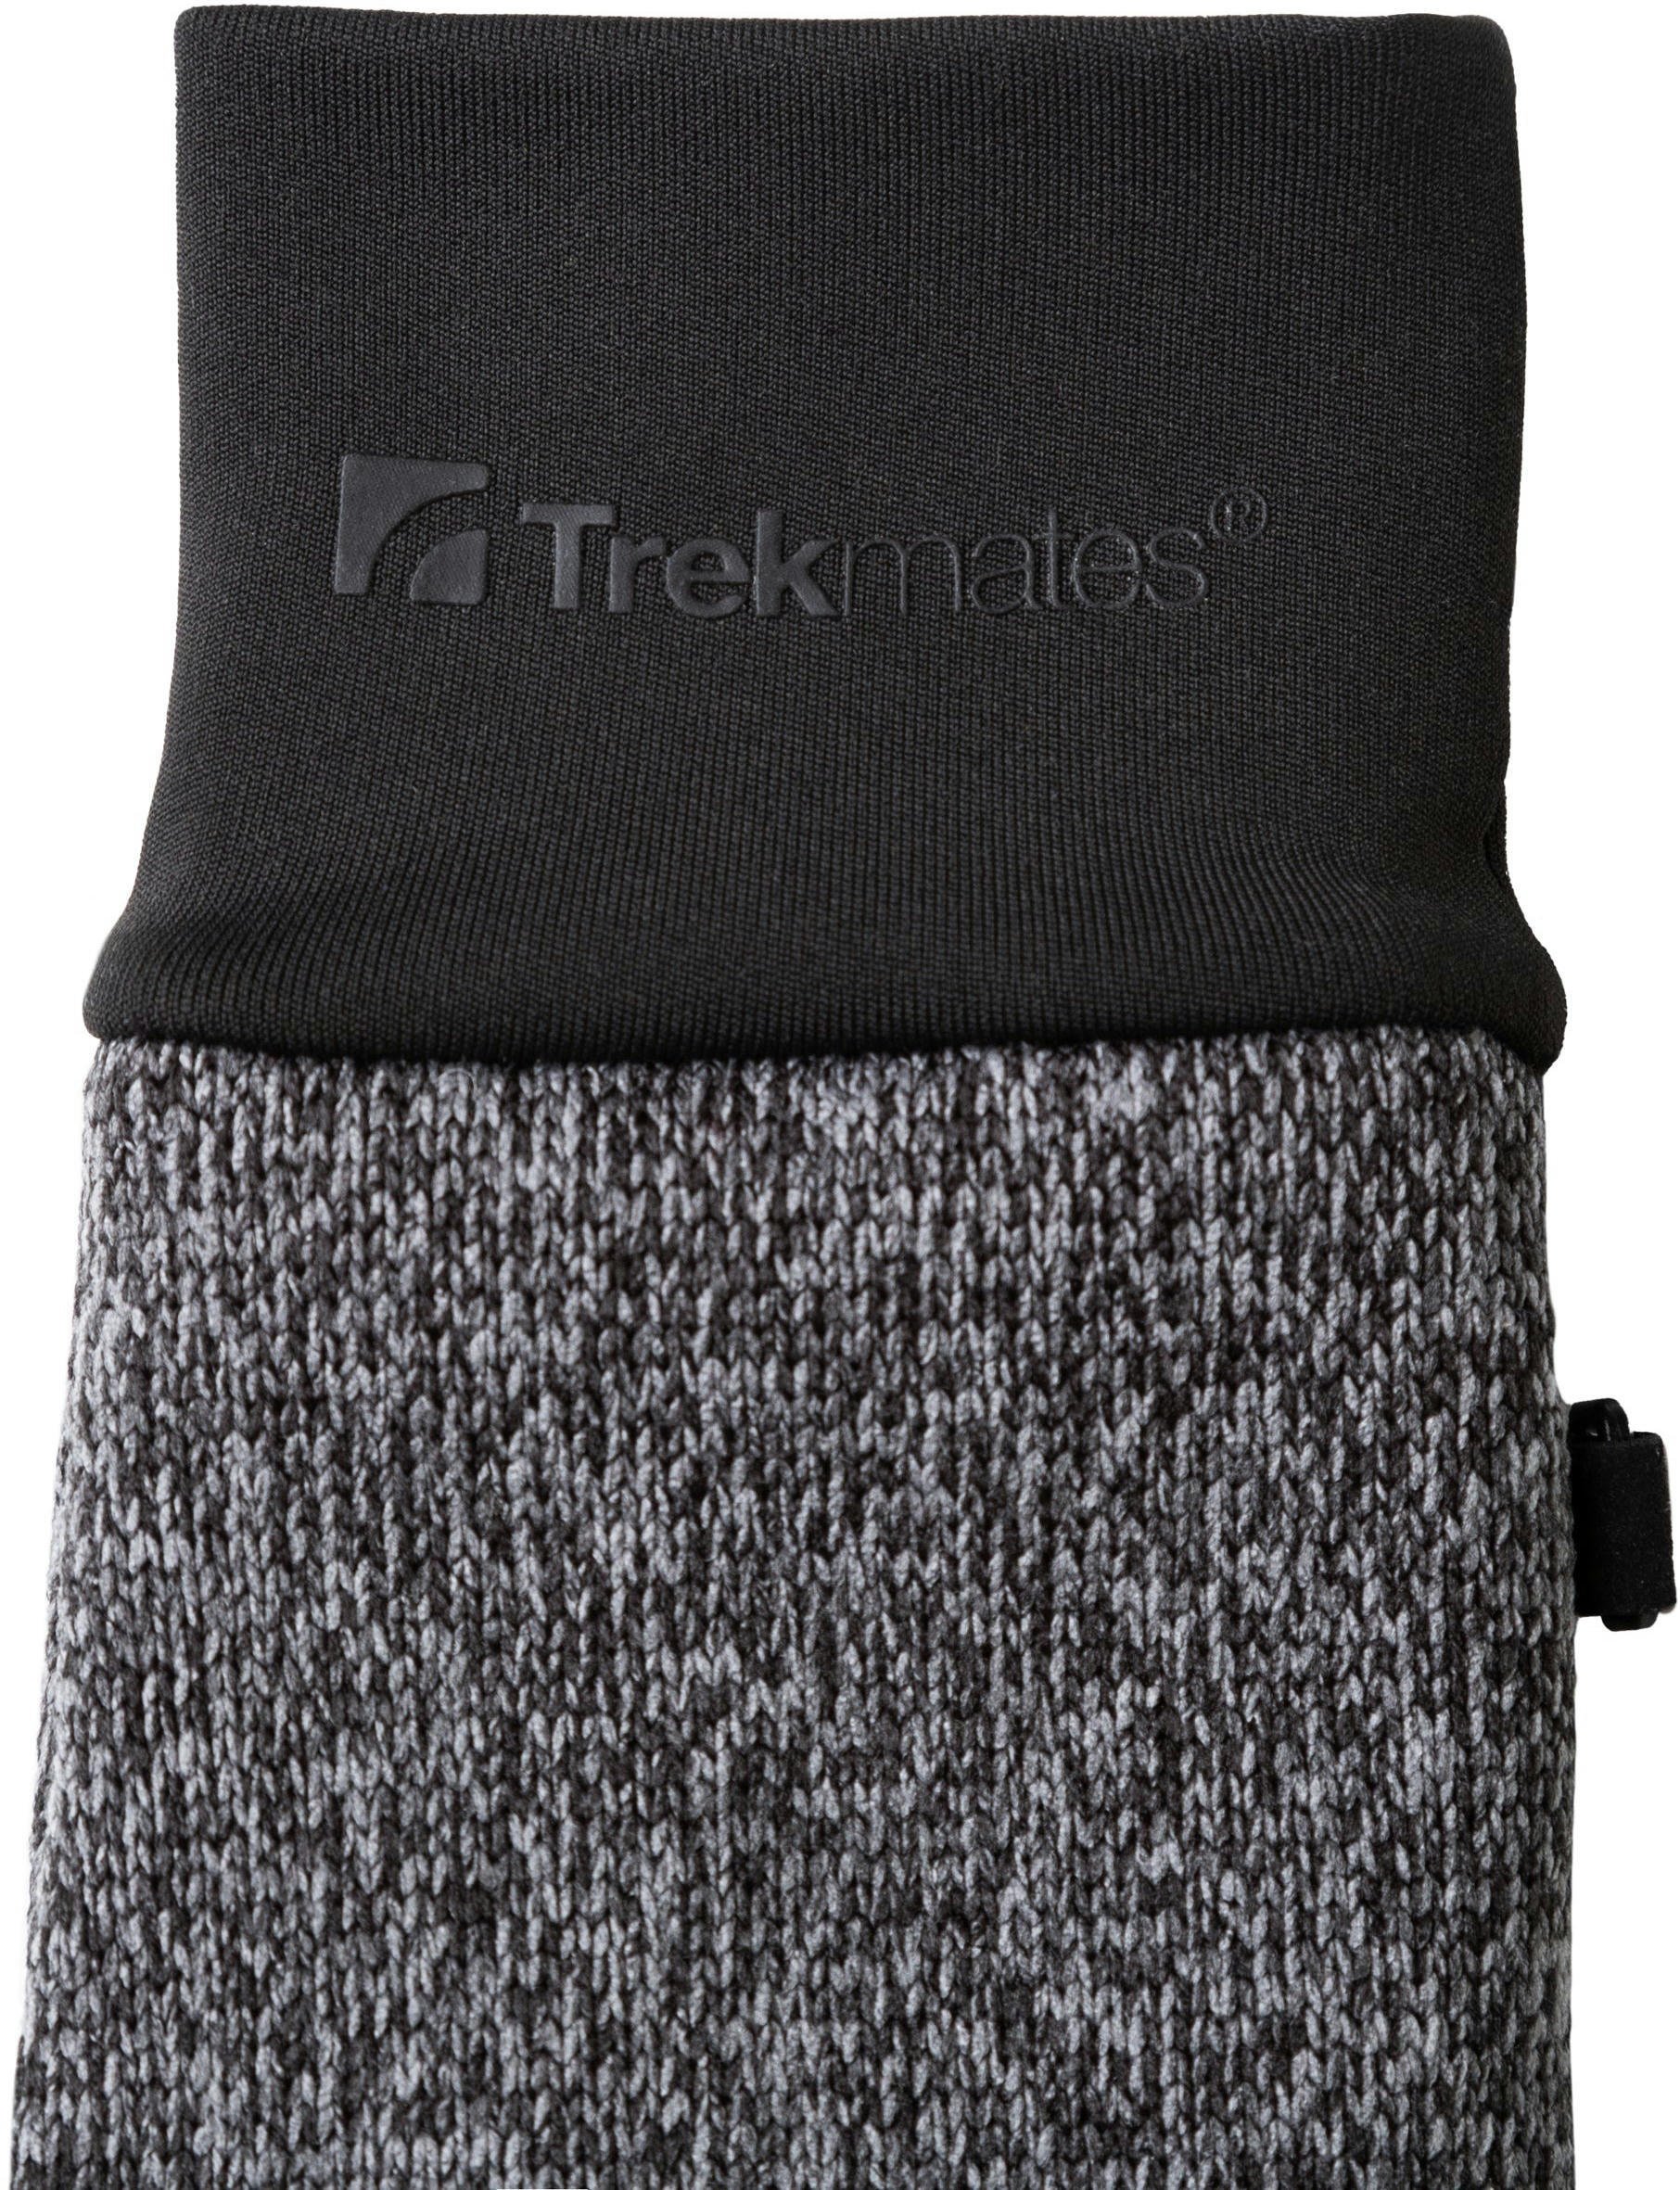 Перчатки Trekmates Tobermory Dry Glove TM-005673 dark grey marl - M - серый фото 3